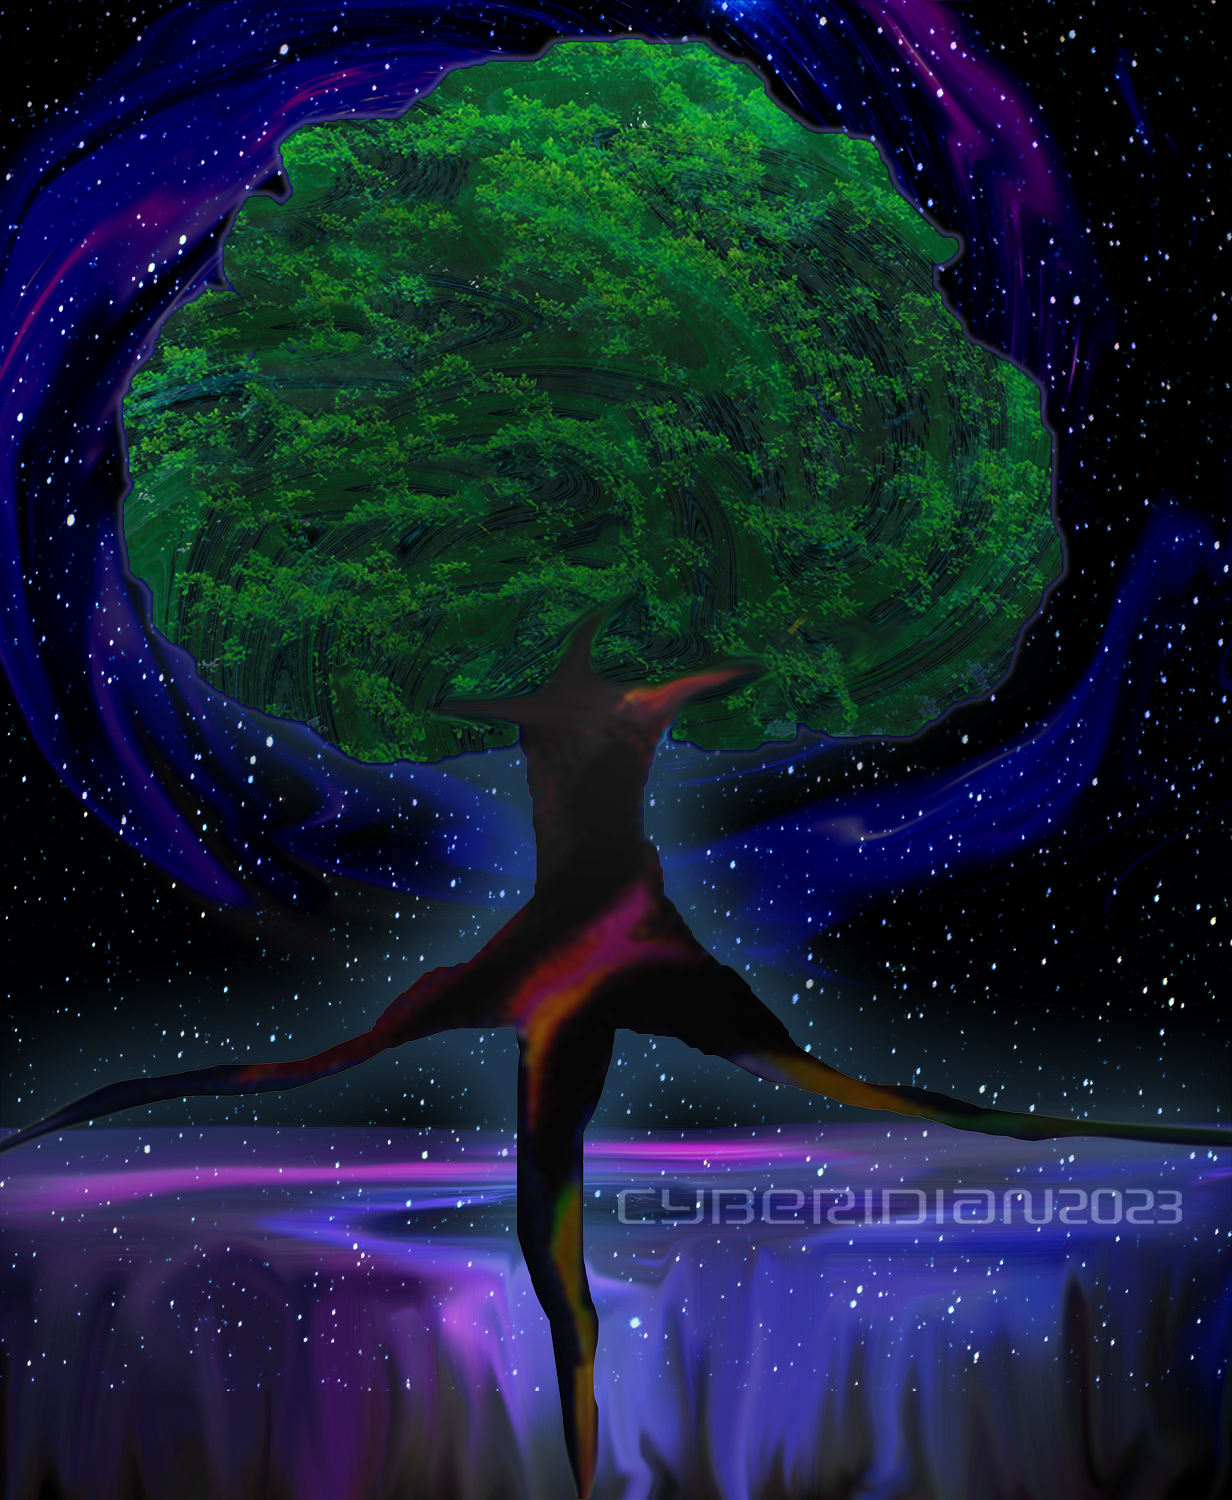 World Tree 2023 Canvas Print - Premium Art Print